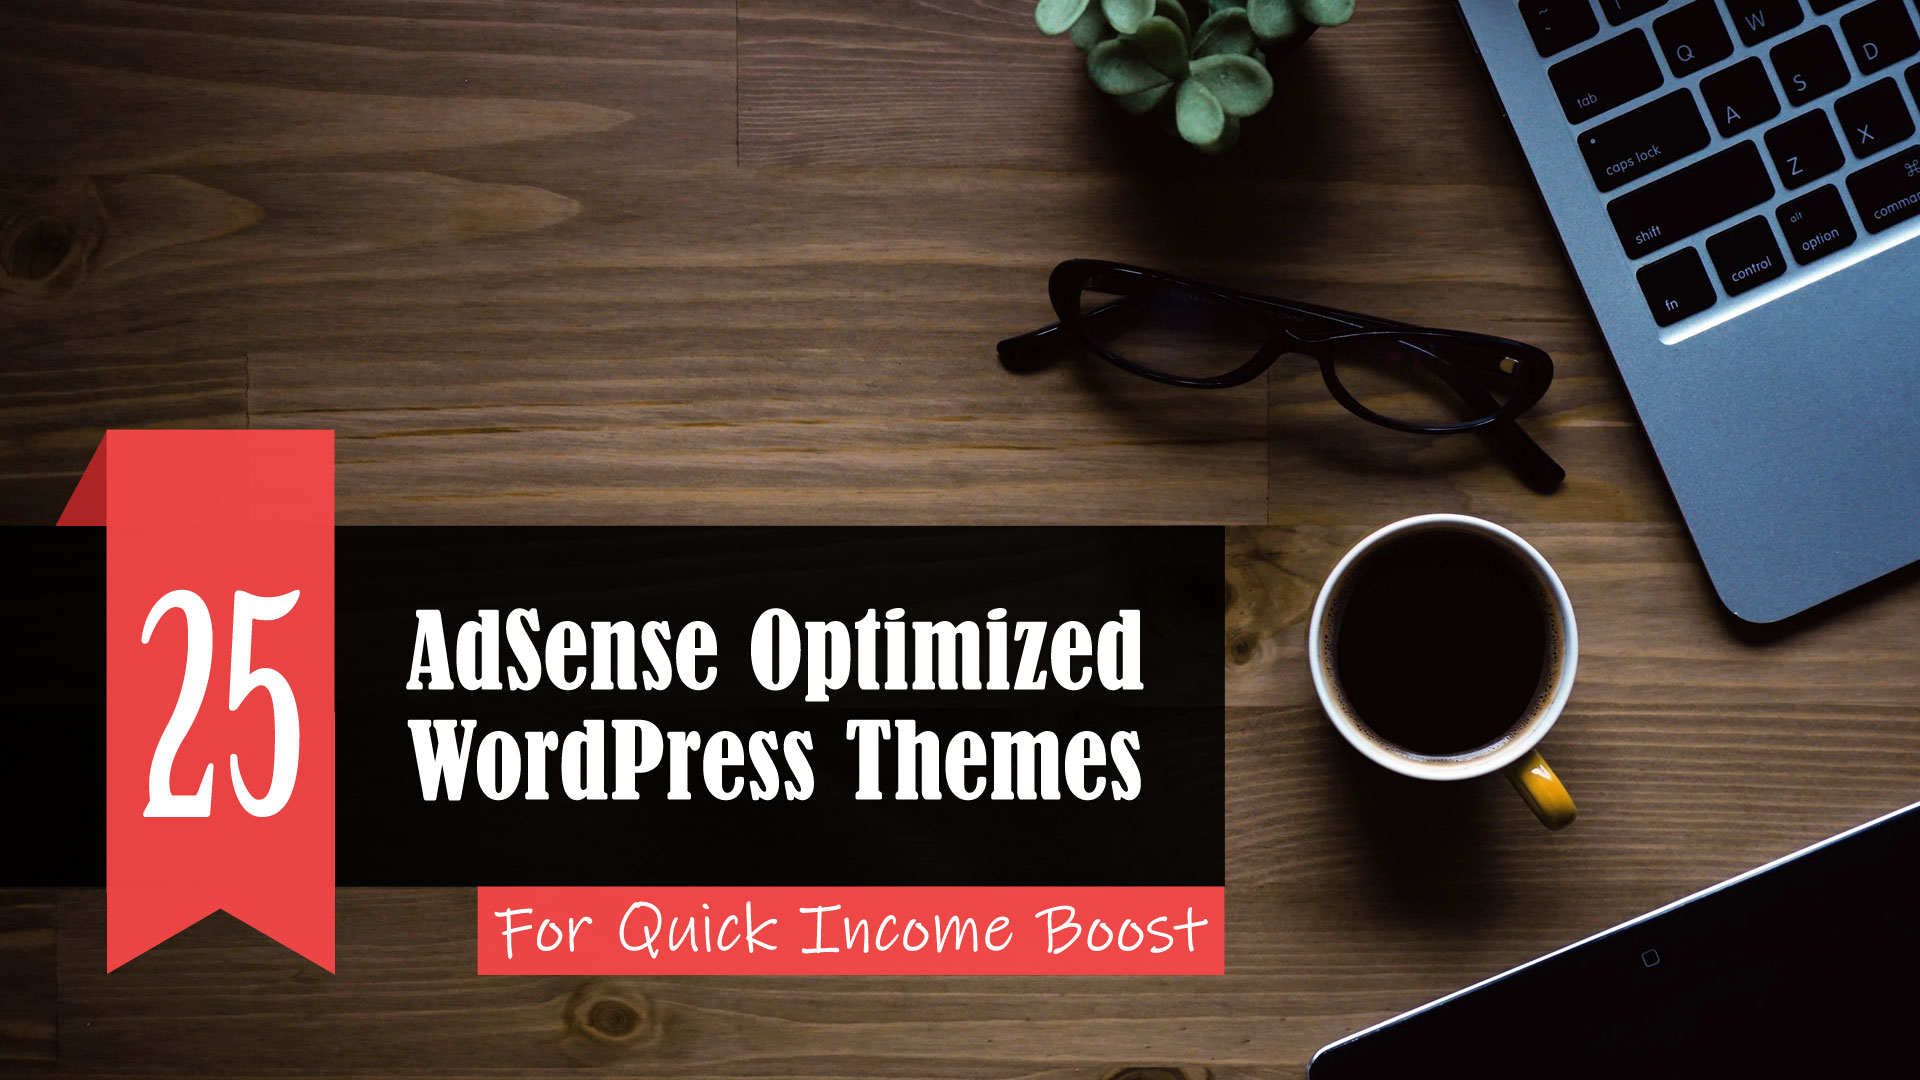 25 Best AdSense Optimized WordPress Themes